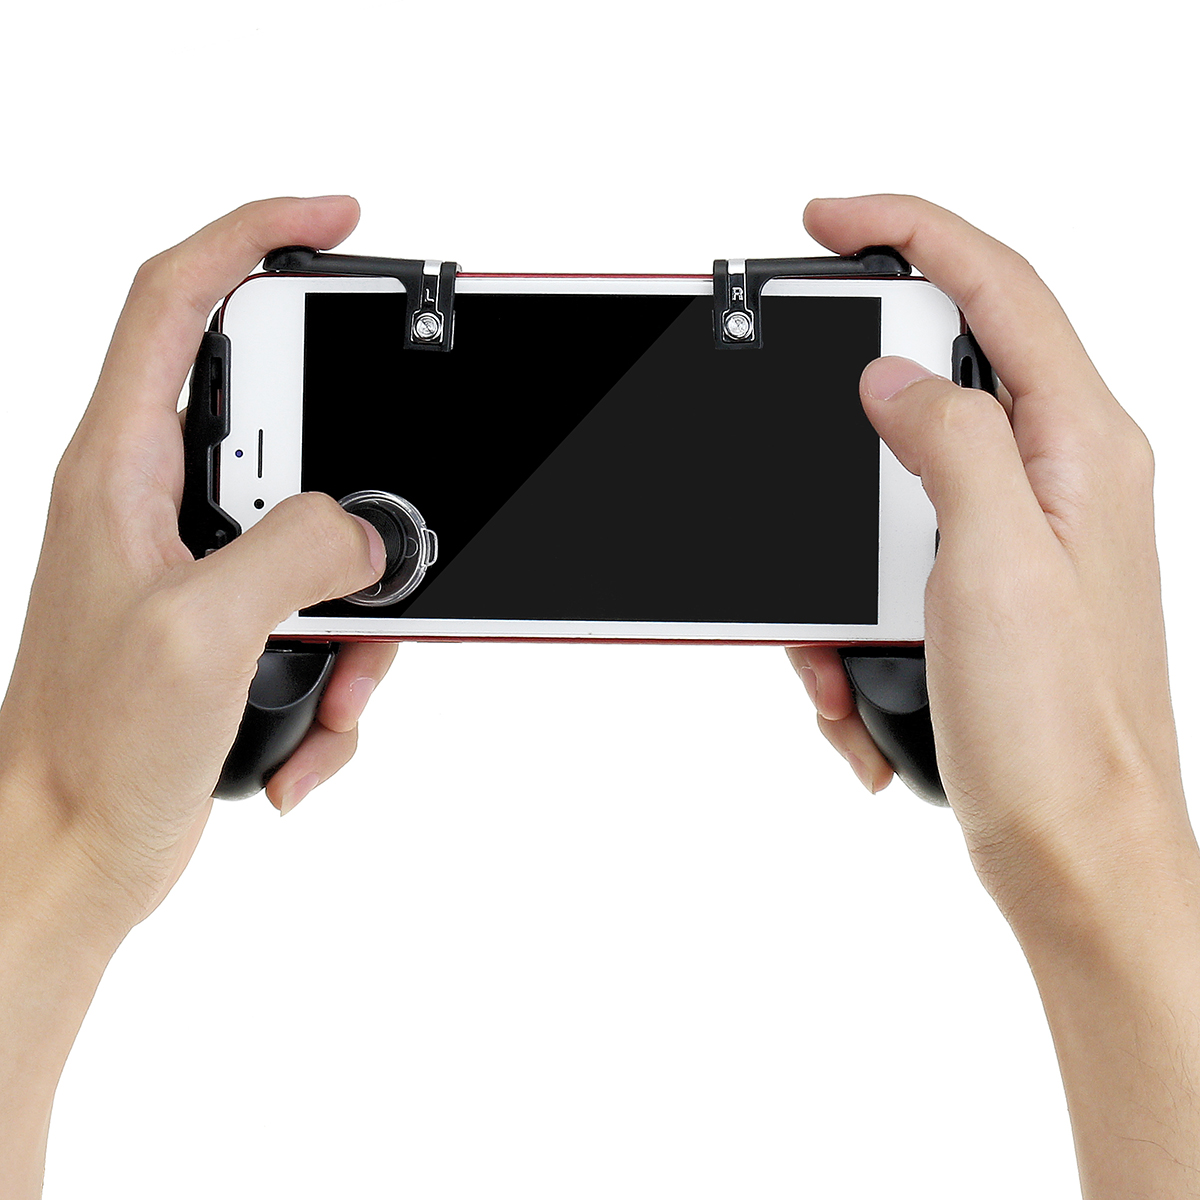 

Game Controller Shooter Mobile Gaming Aiming Fire Trigger Button Handle L1R1 для PUBG Мобильная игра с телефоном